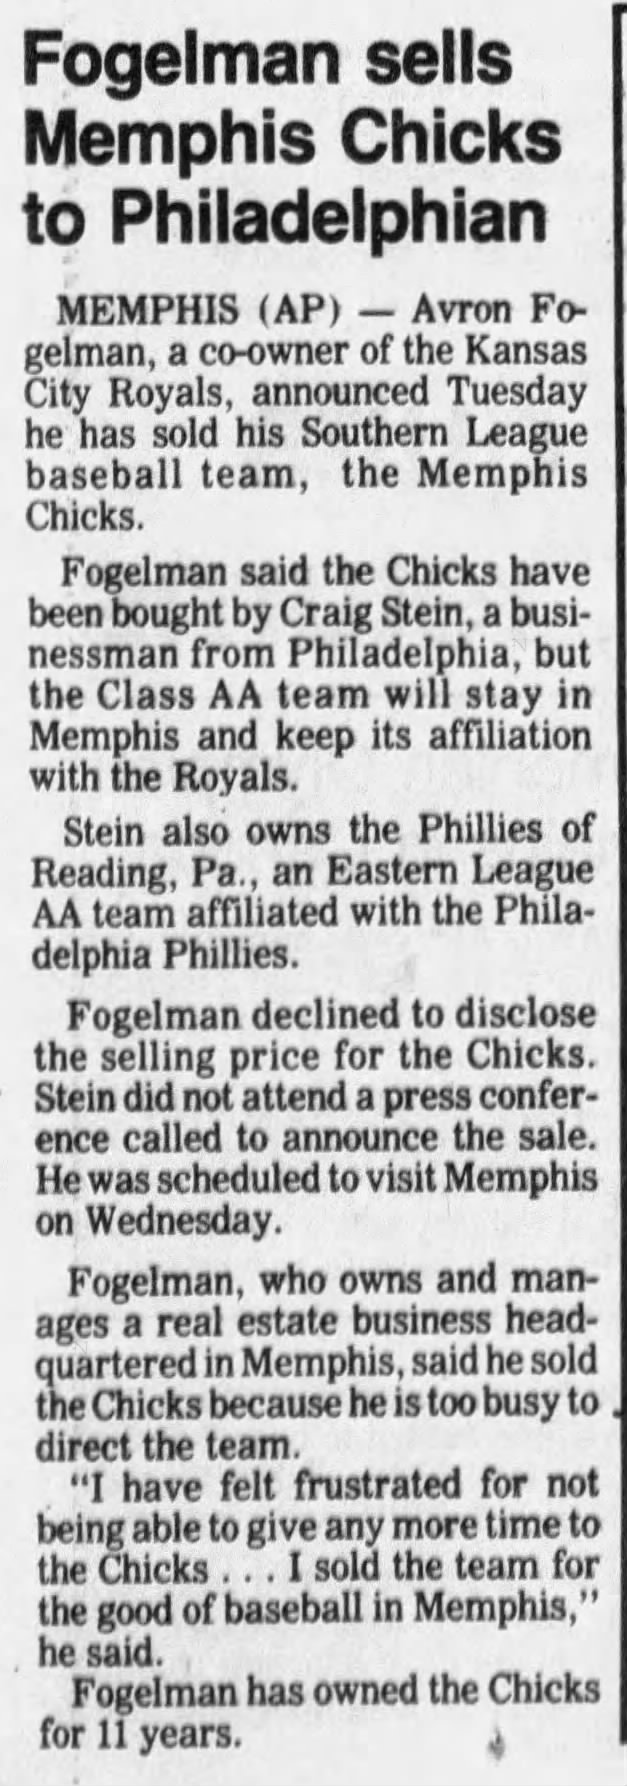 Fogelman Sells Memphis Chicks to Philadelphian